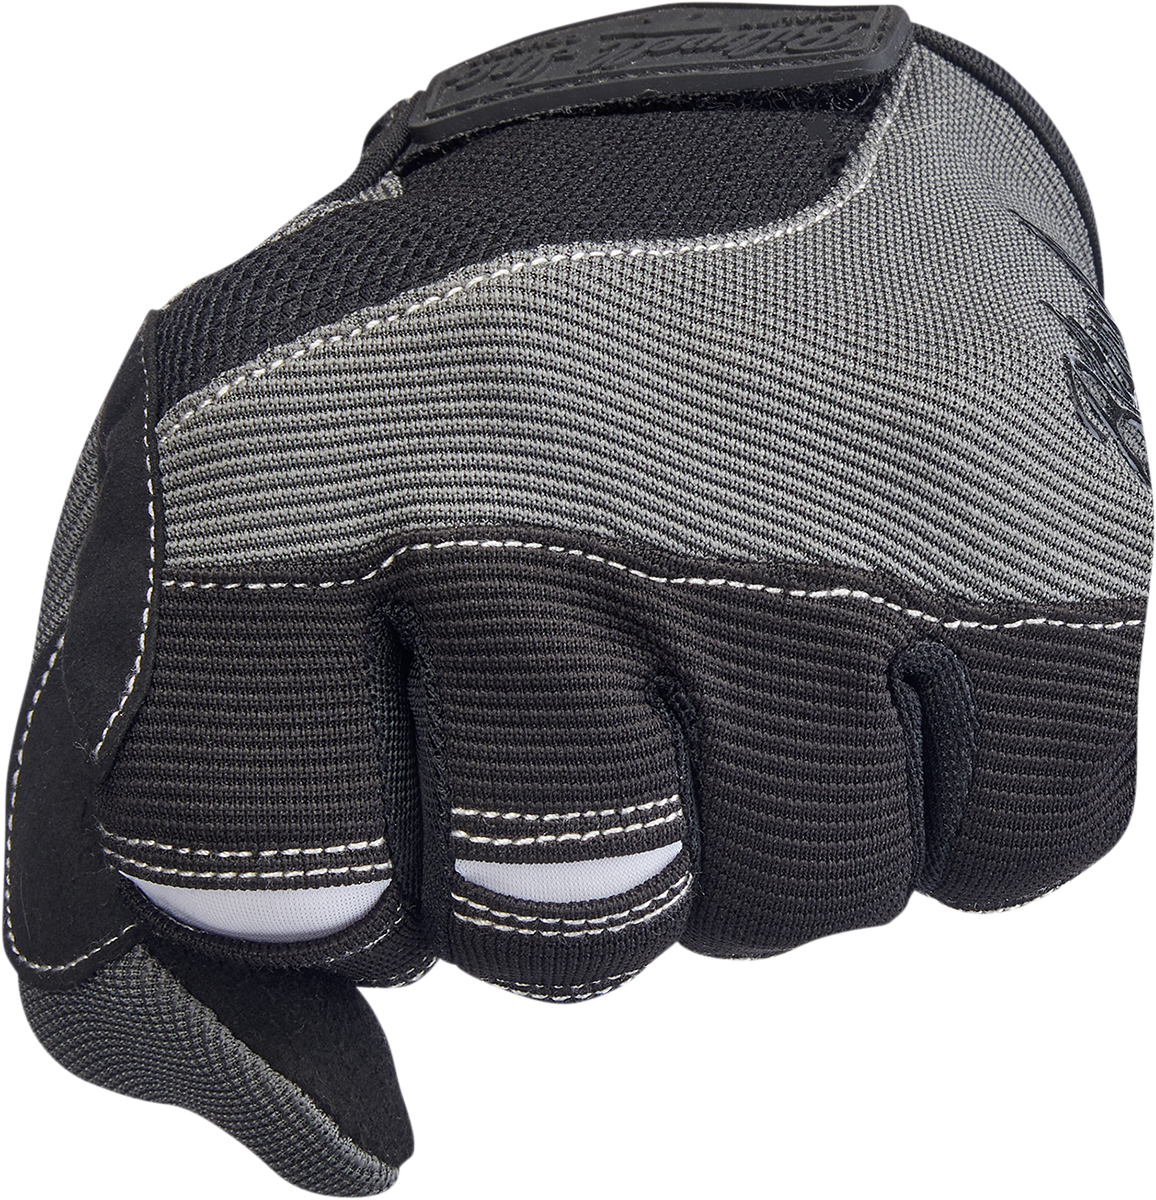 BILTWELL Moto Gloves - Gray/Black